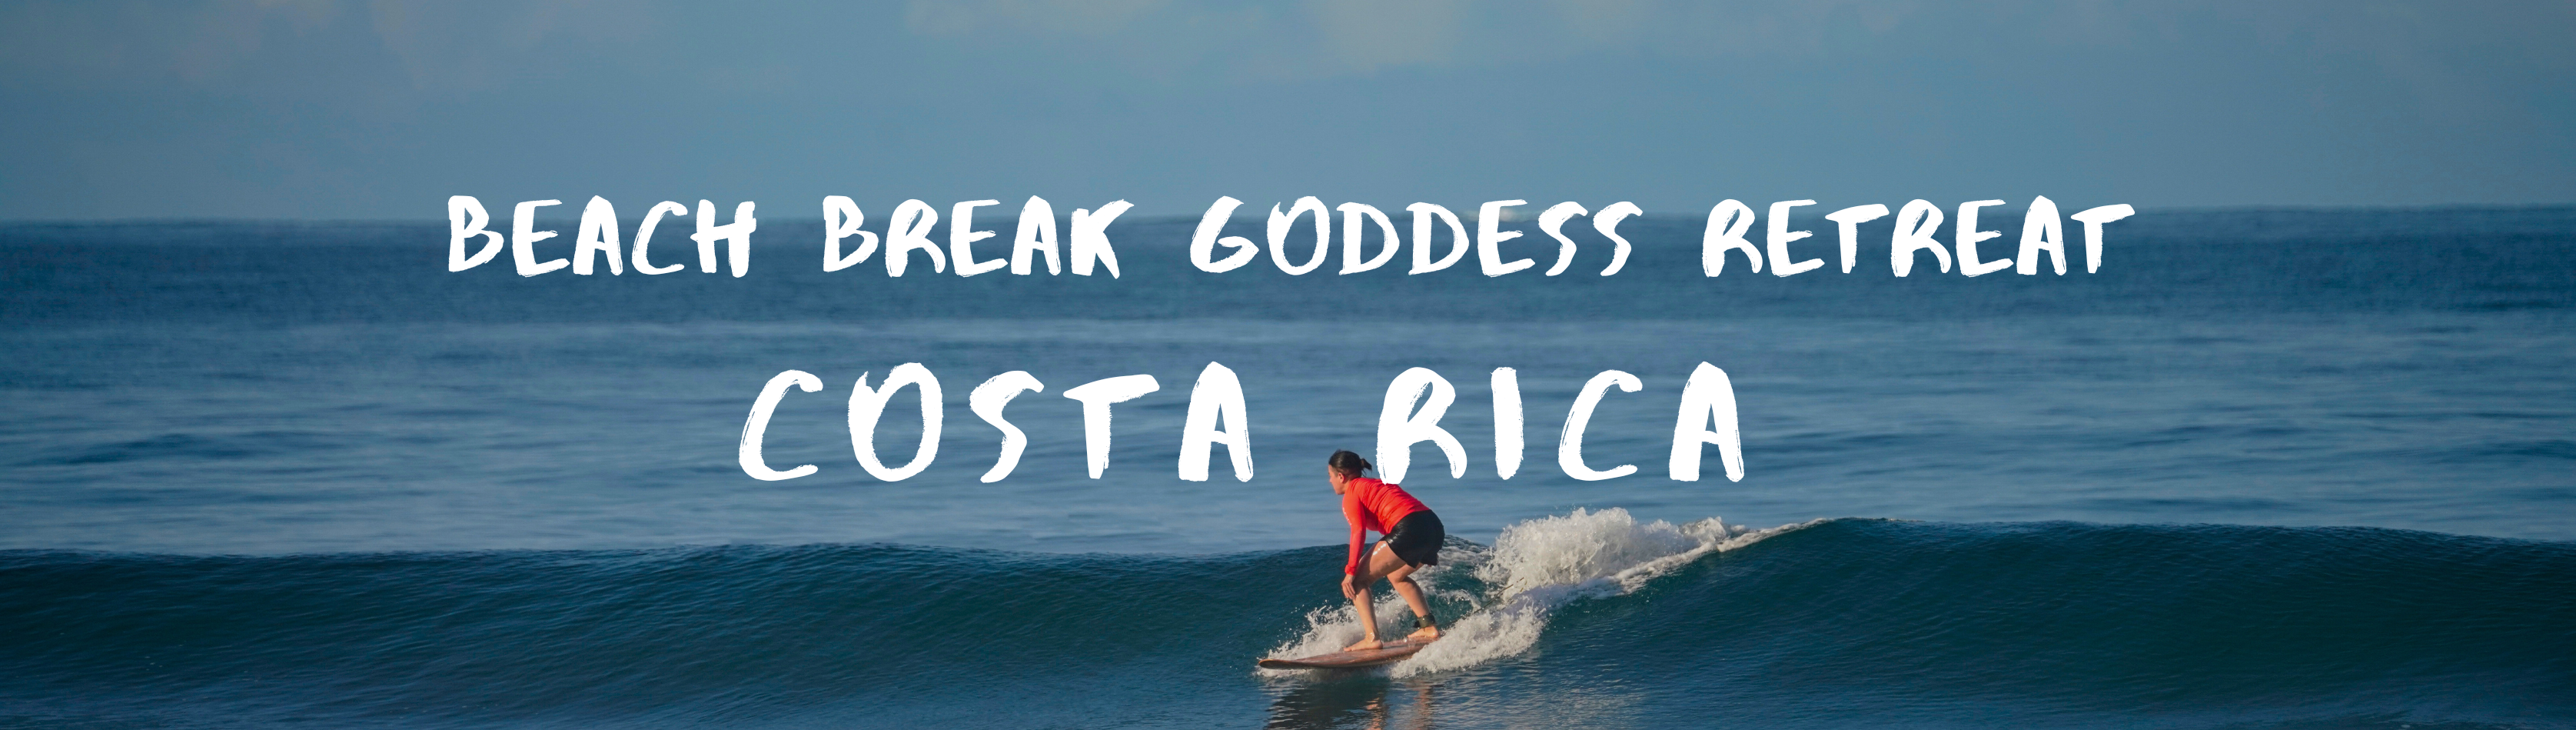 surf with amigas retreat Costa Rica womens